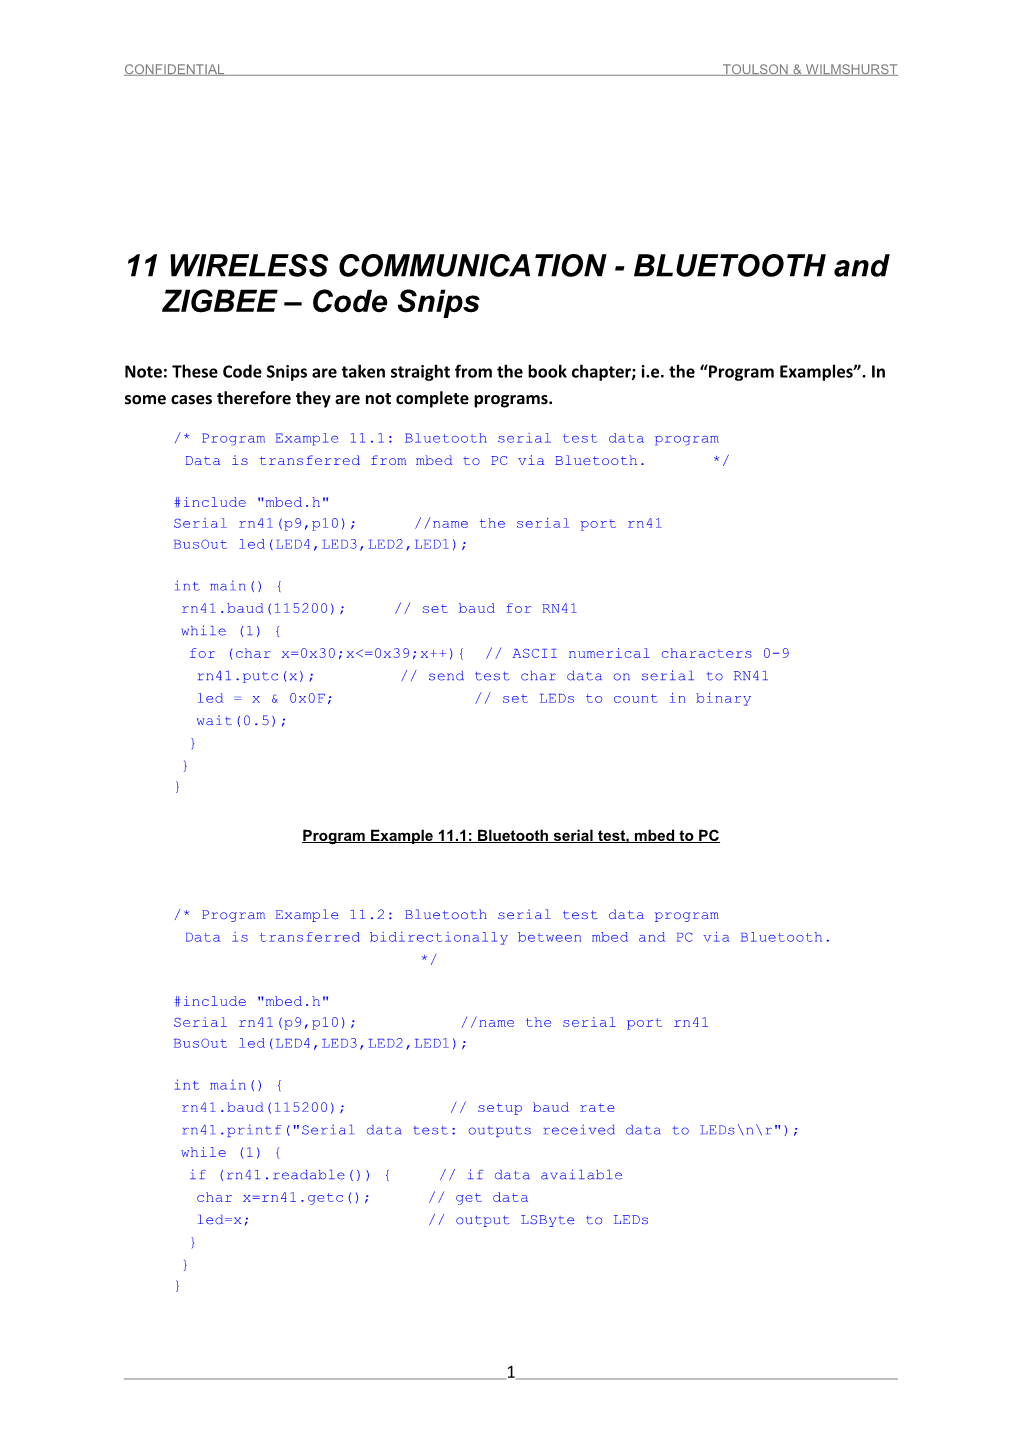 11 WIRELESS COMMUNICATION - BLUETOOTH and ZIGBEE Code Snips